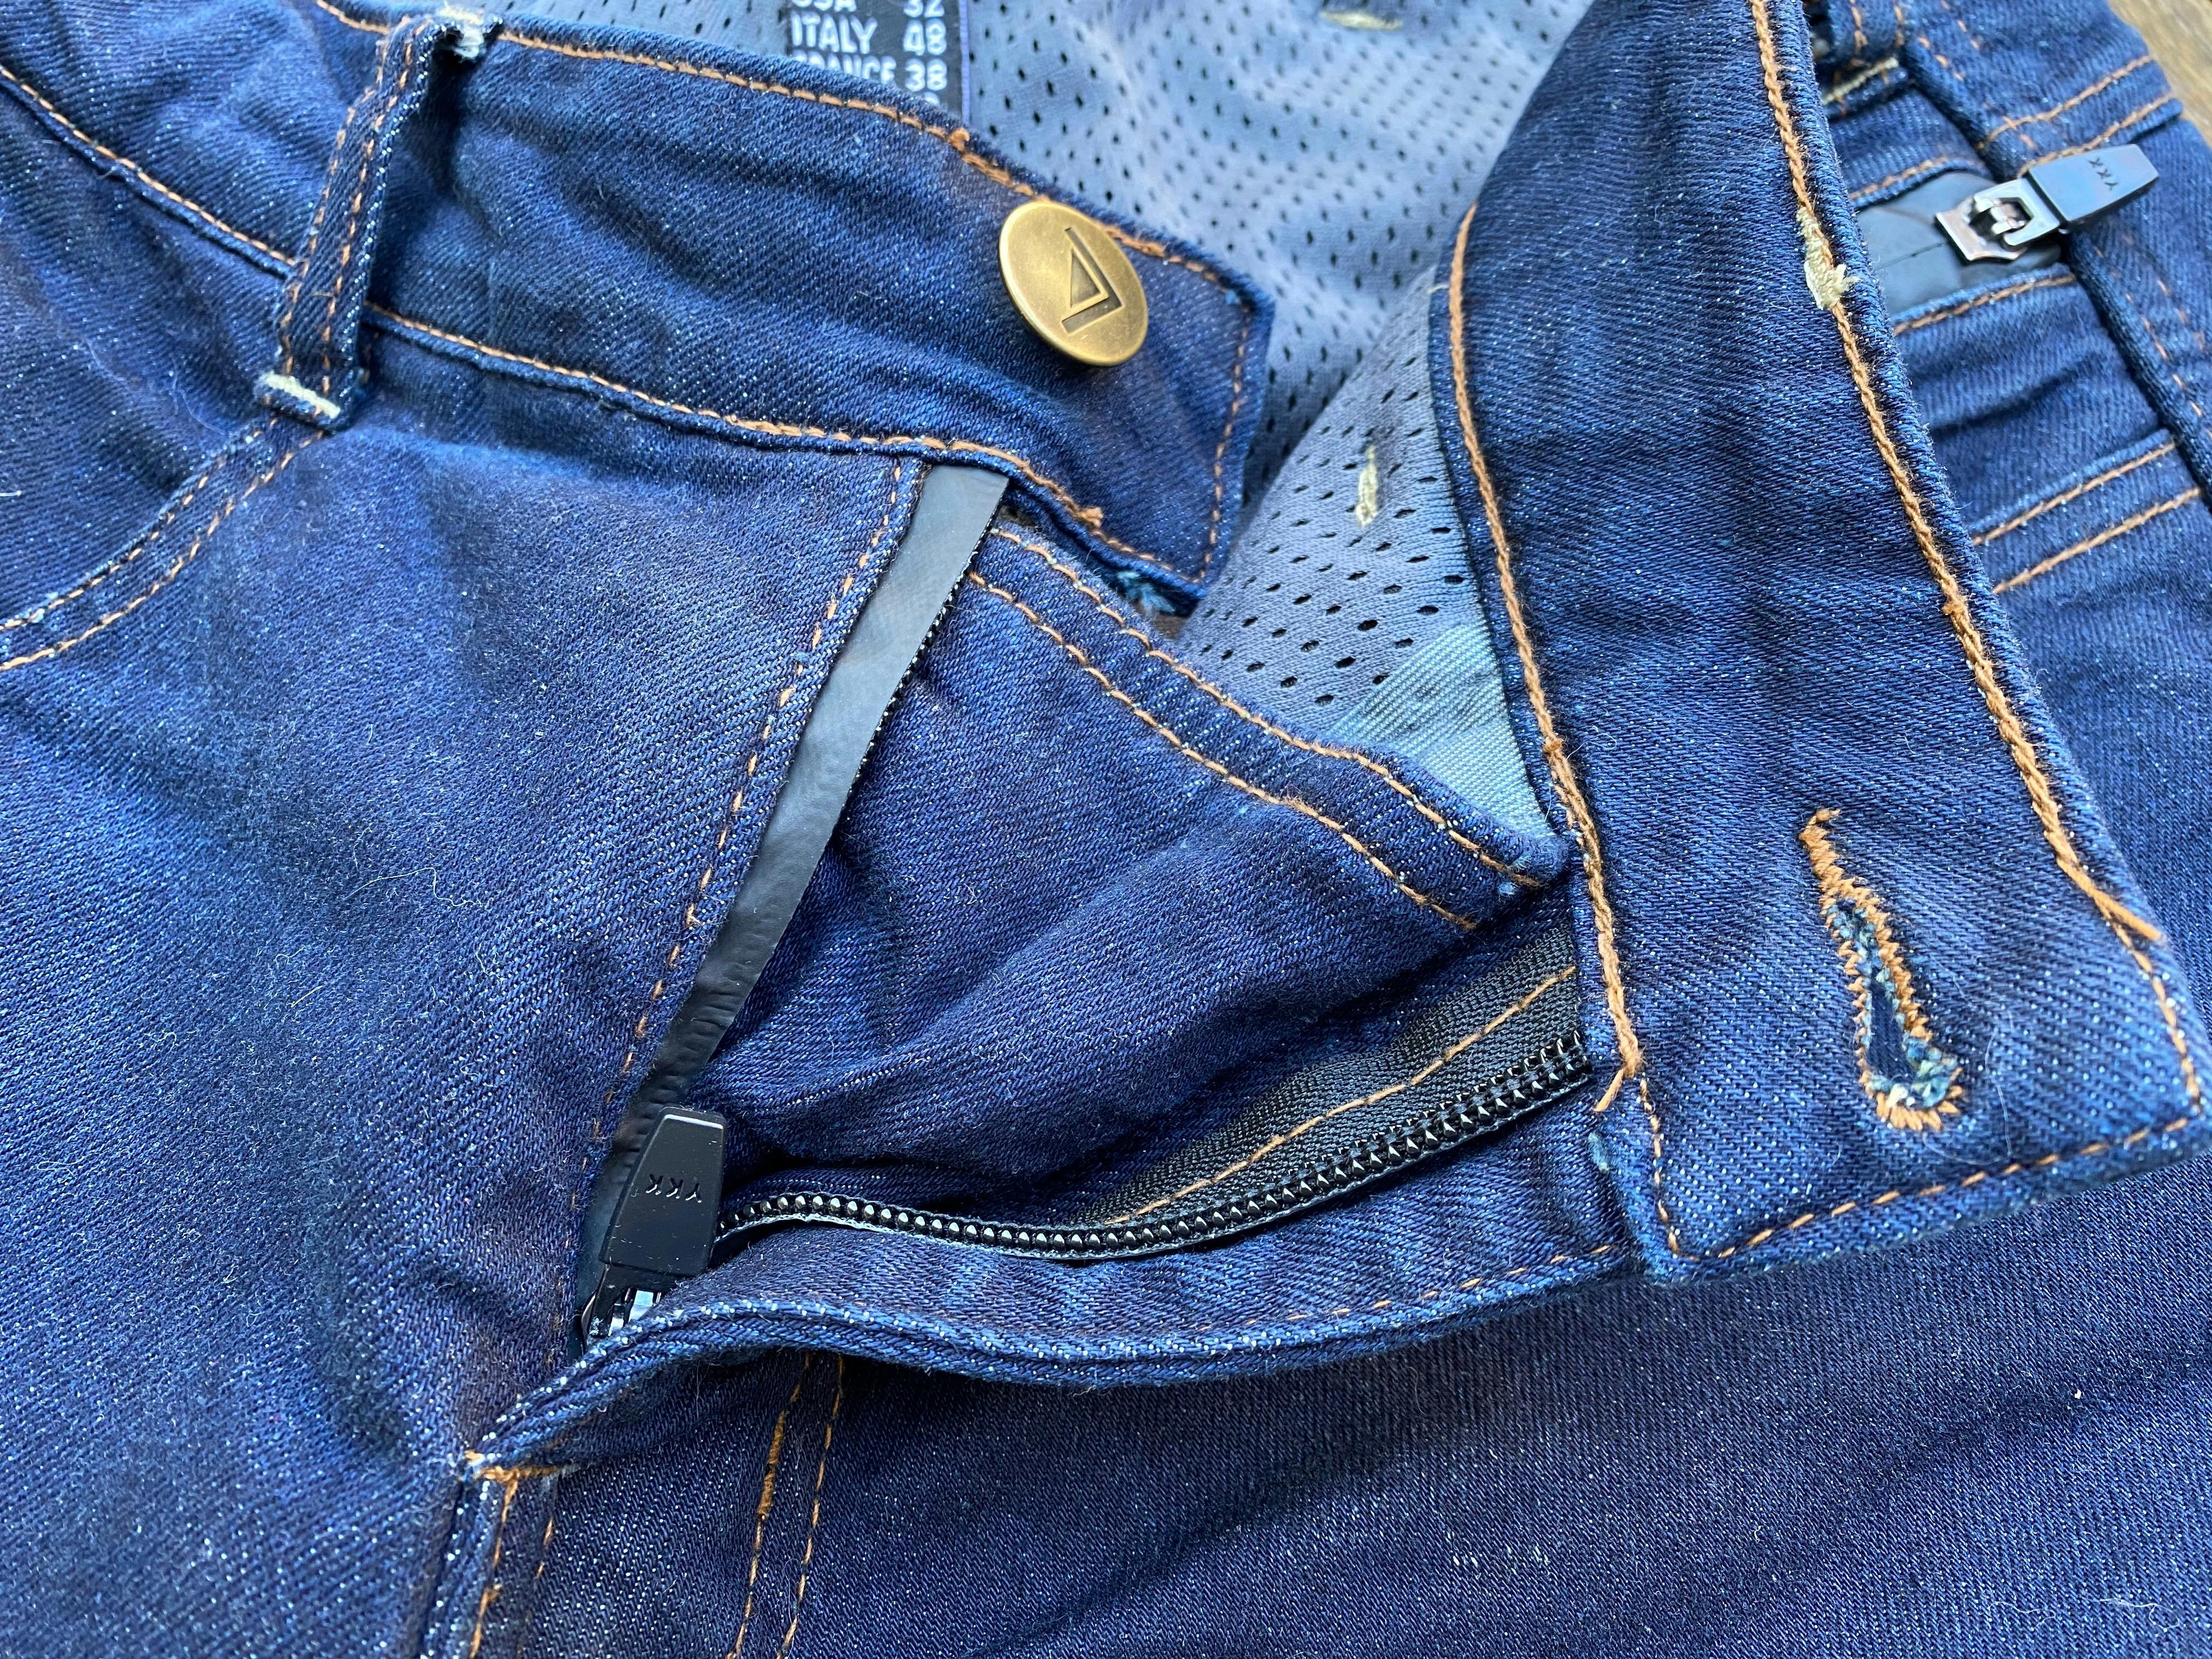 Heat welded tape to create a waterproof zip on a pair of blue merlin jeans